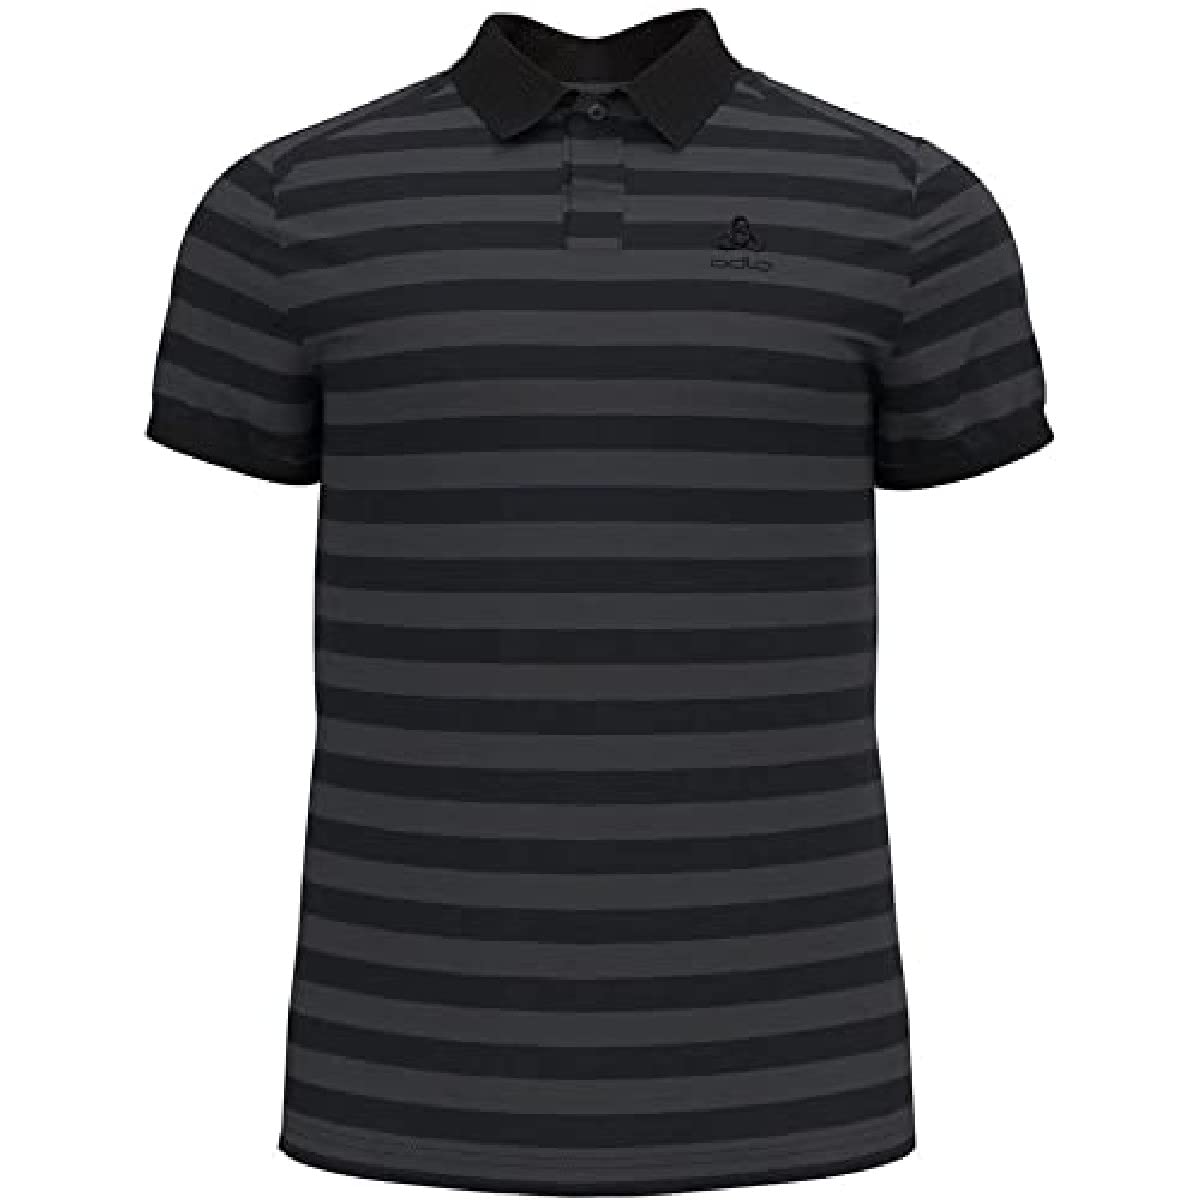 Odlo Herren Polo Shirt CONCORD, black - new odlo graphite grey, XL